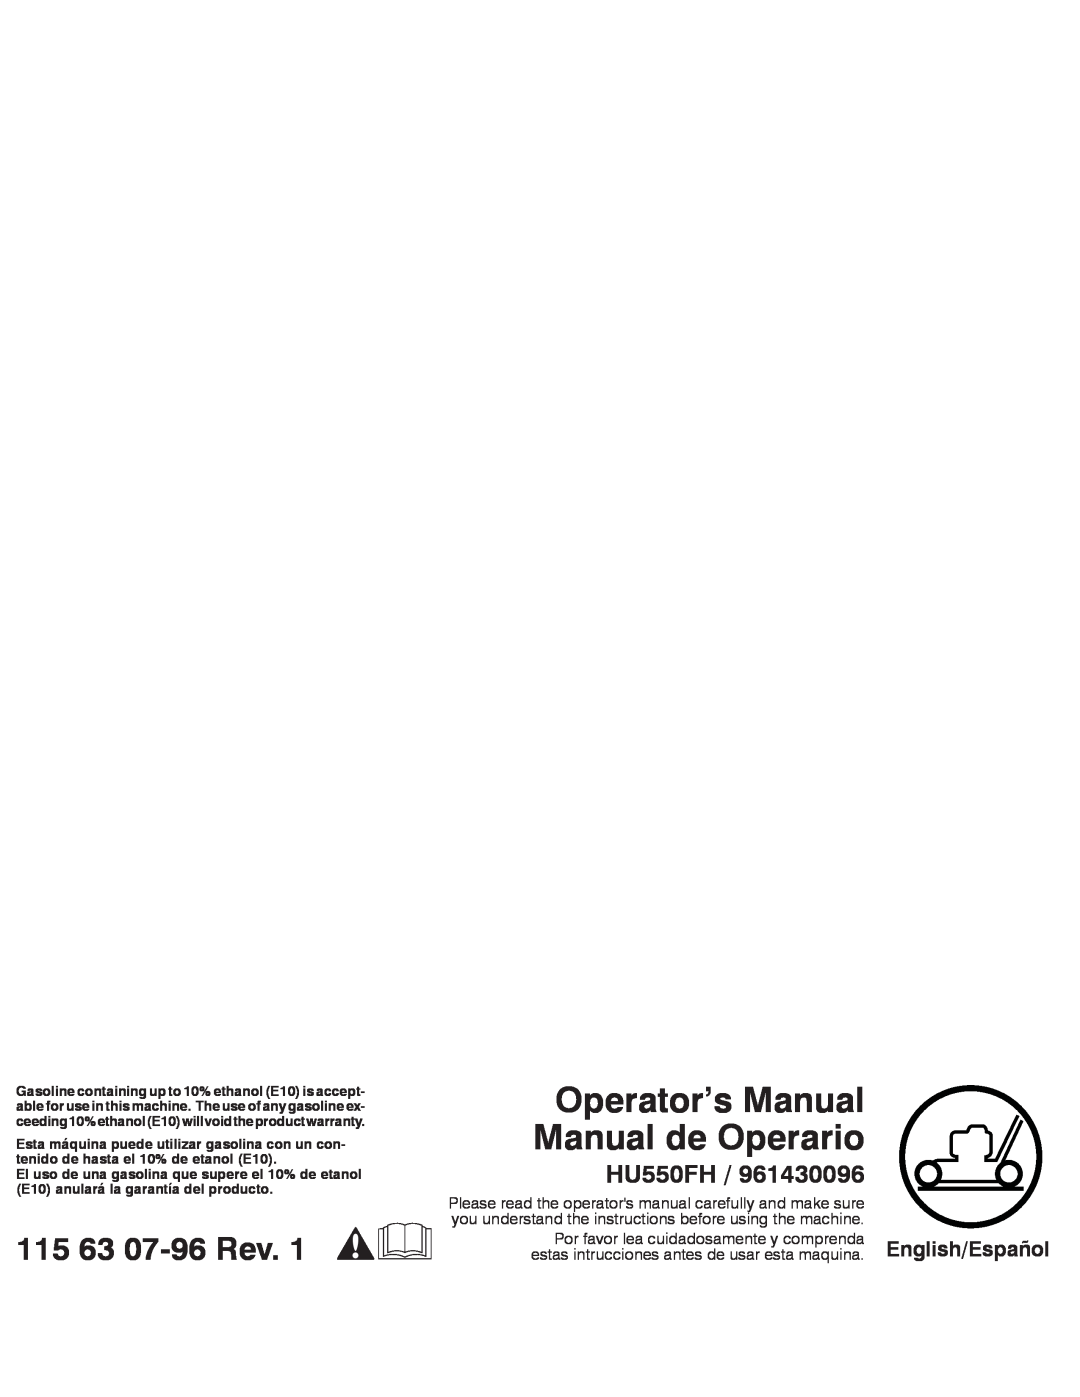 Husqvarna 961430096 warranty HU550FH, Operator’s Manual Manual de Operario, 115 63 07-96Rev, English/Español 